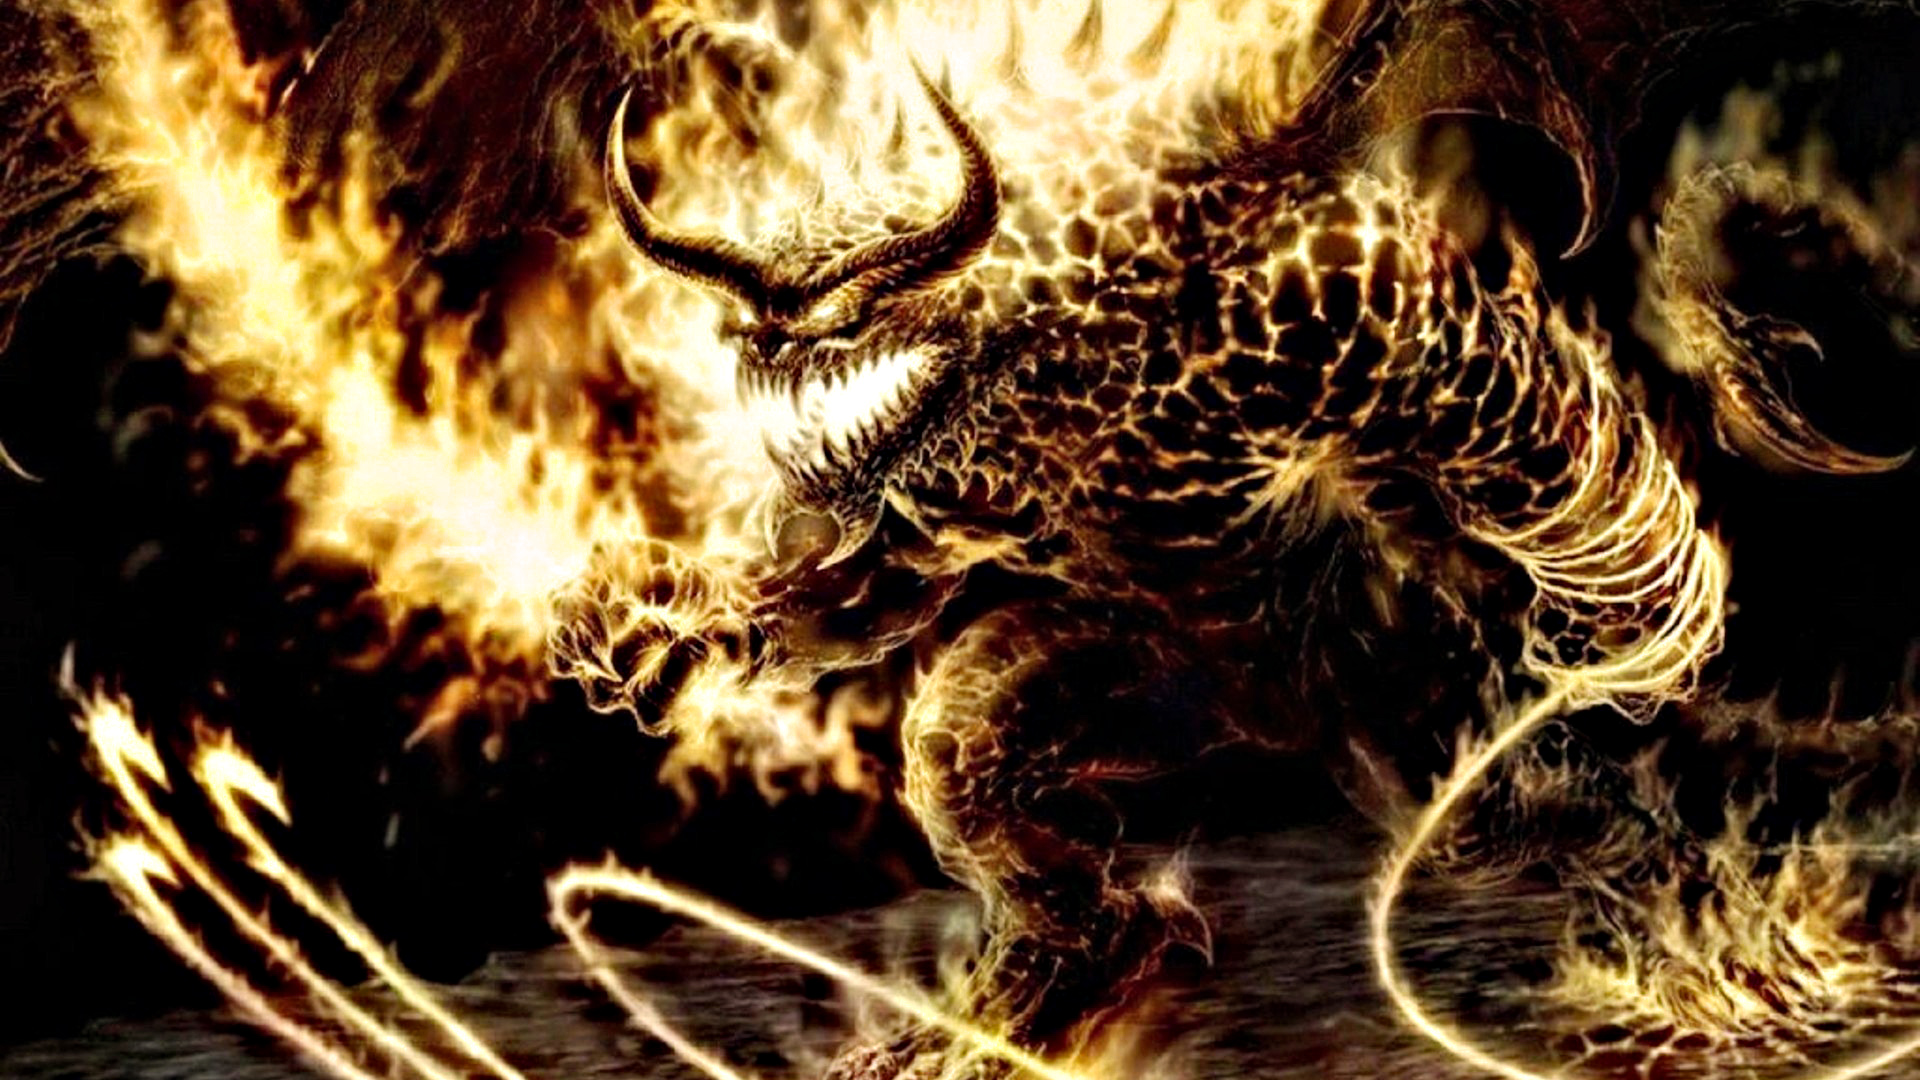 Bull Devil Demon Of Hell Wallpaper HD With